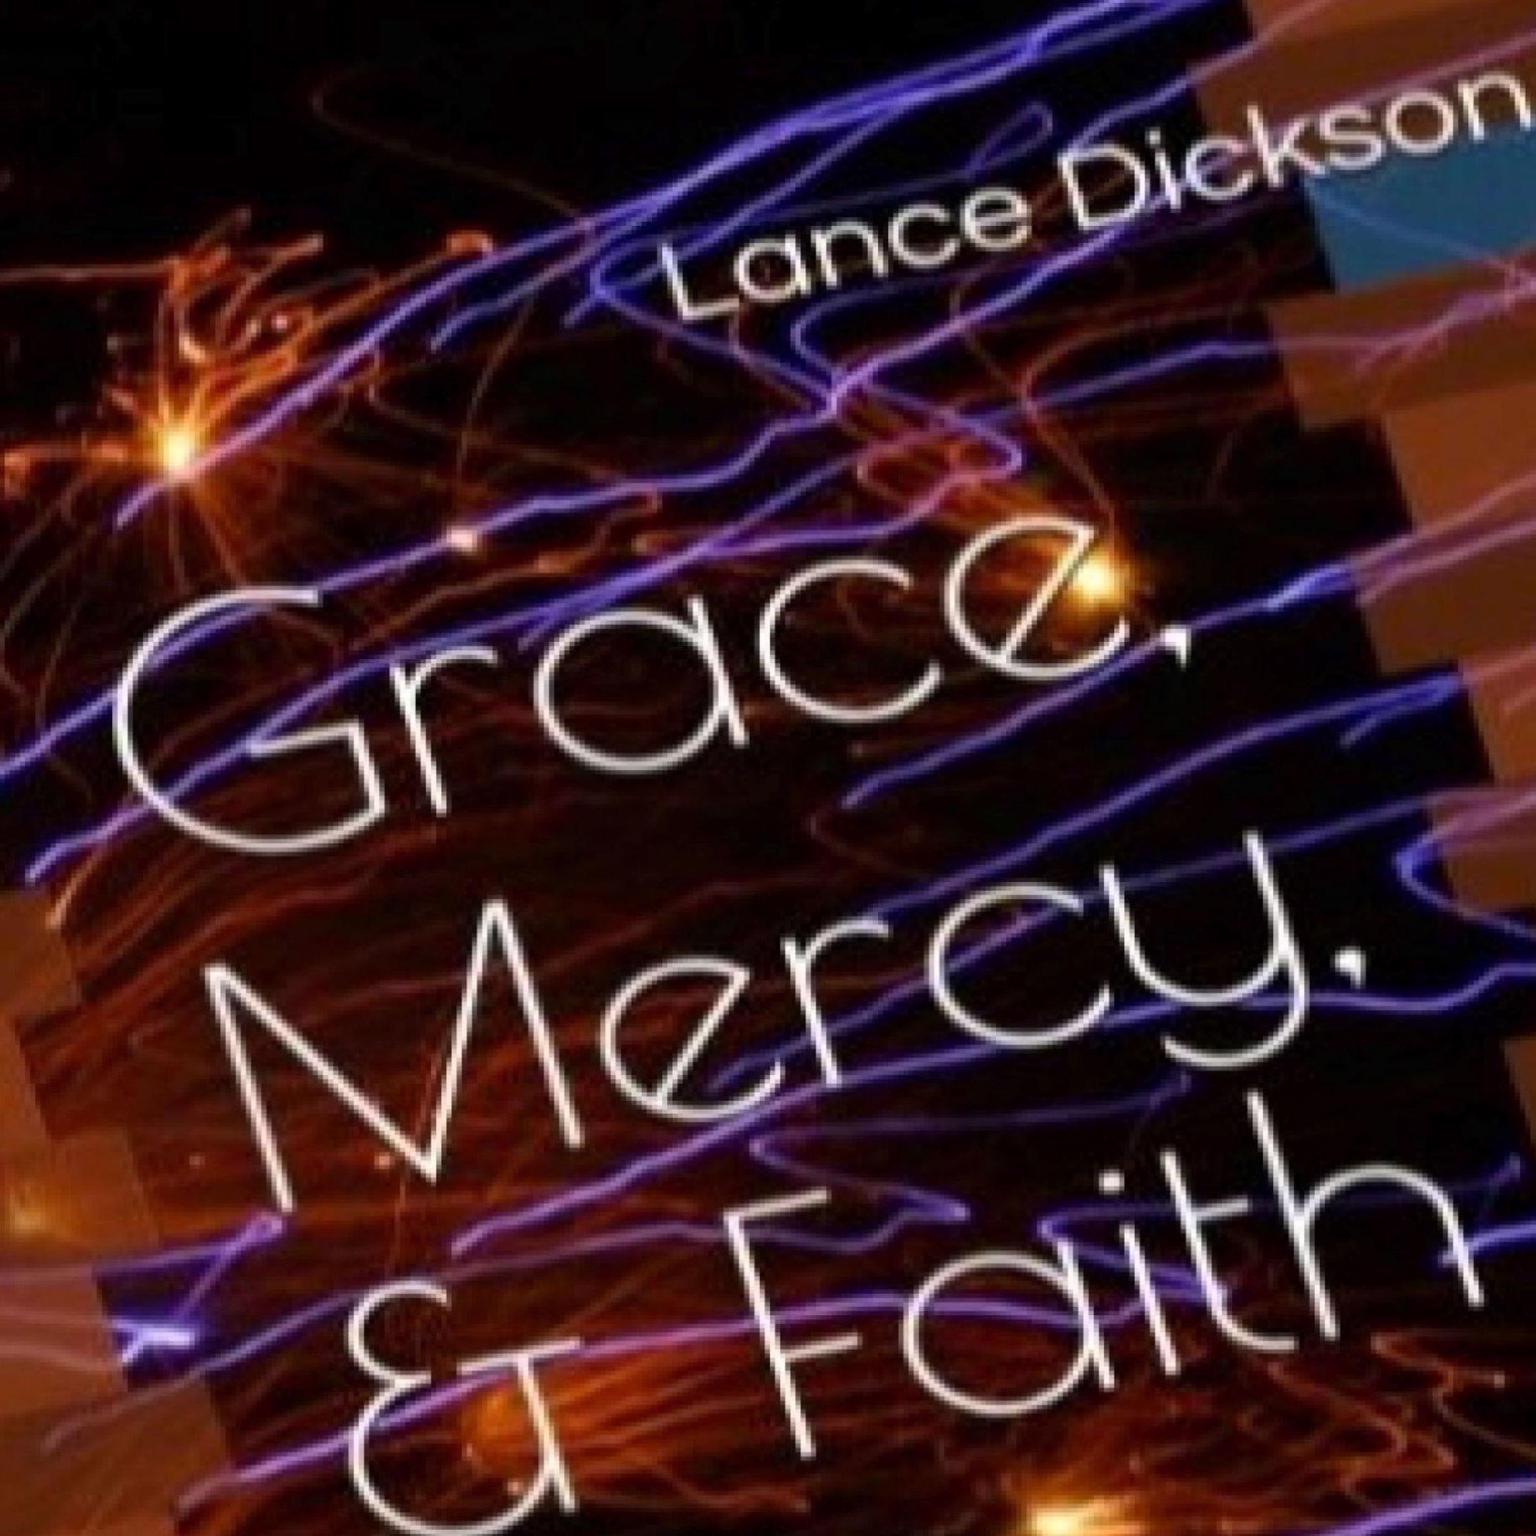 Grace Mercy & Faith: The Keys to Spiritual Empowerment Audiobook, by Lance Dickson